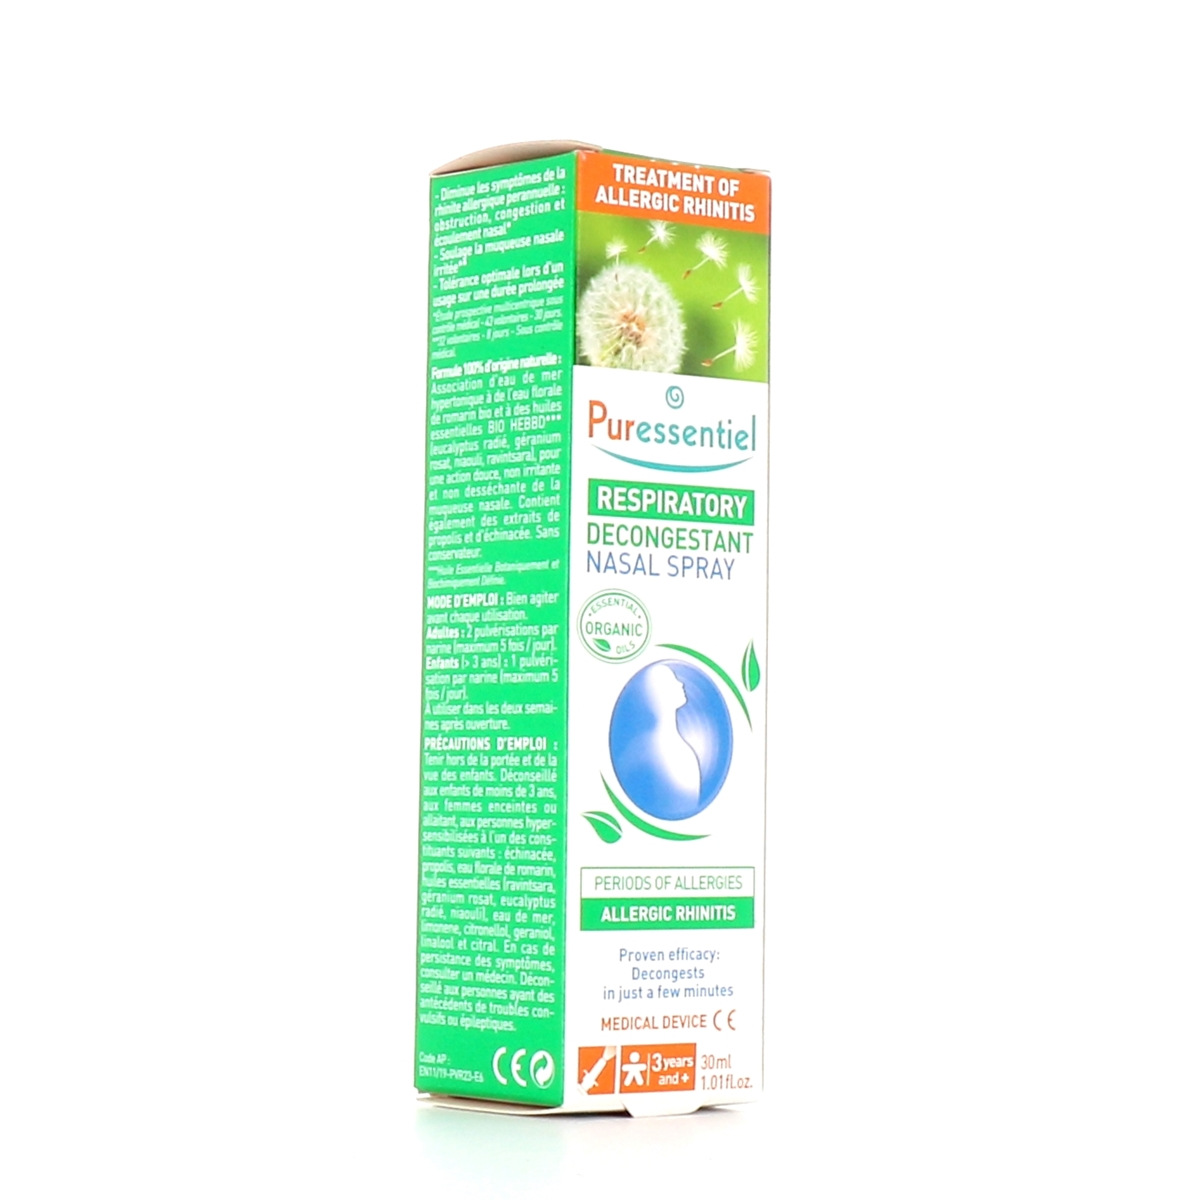 OLIOSEPTIL® Spray nasal - Soulage la congestion nasale - 20ml - Olioseptil